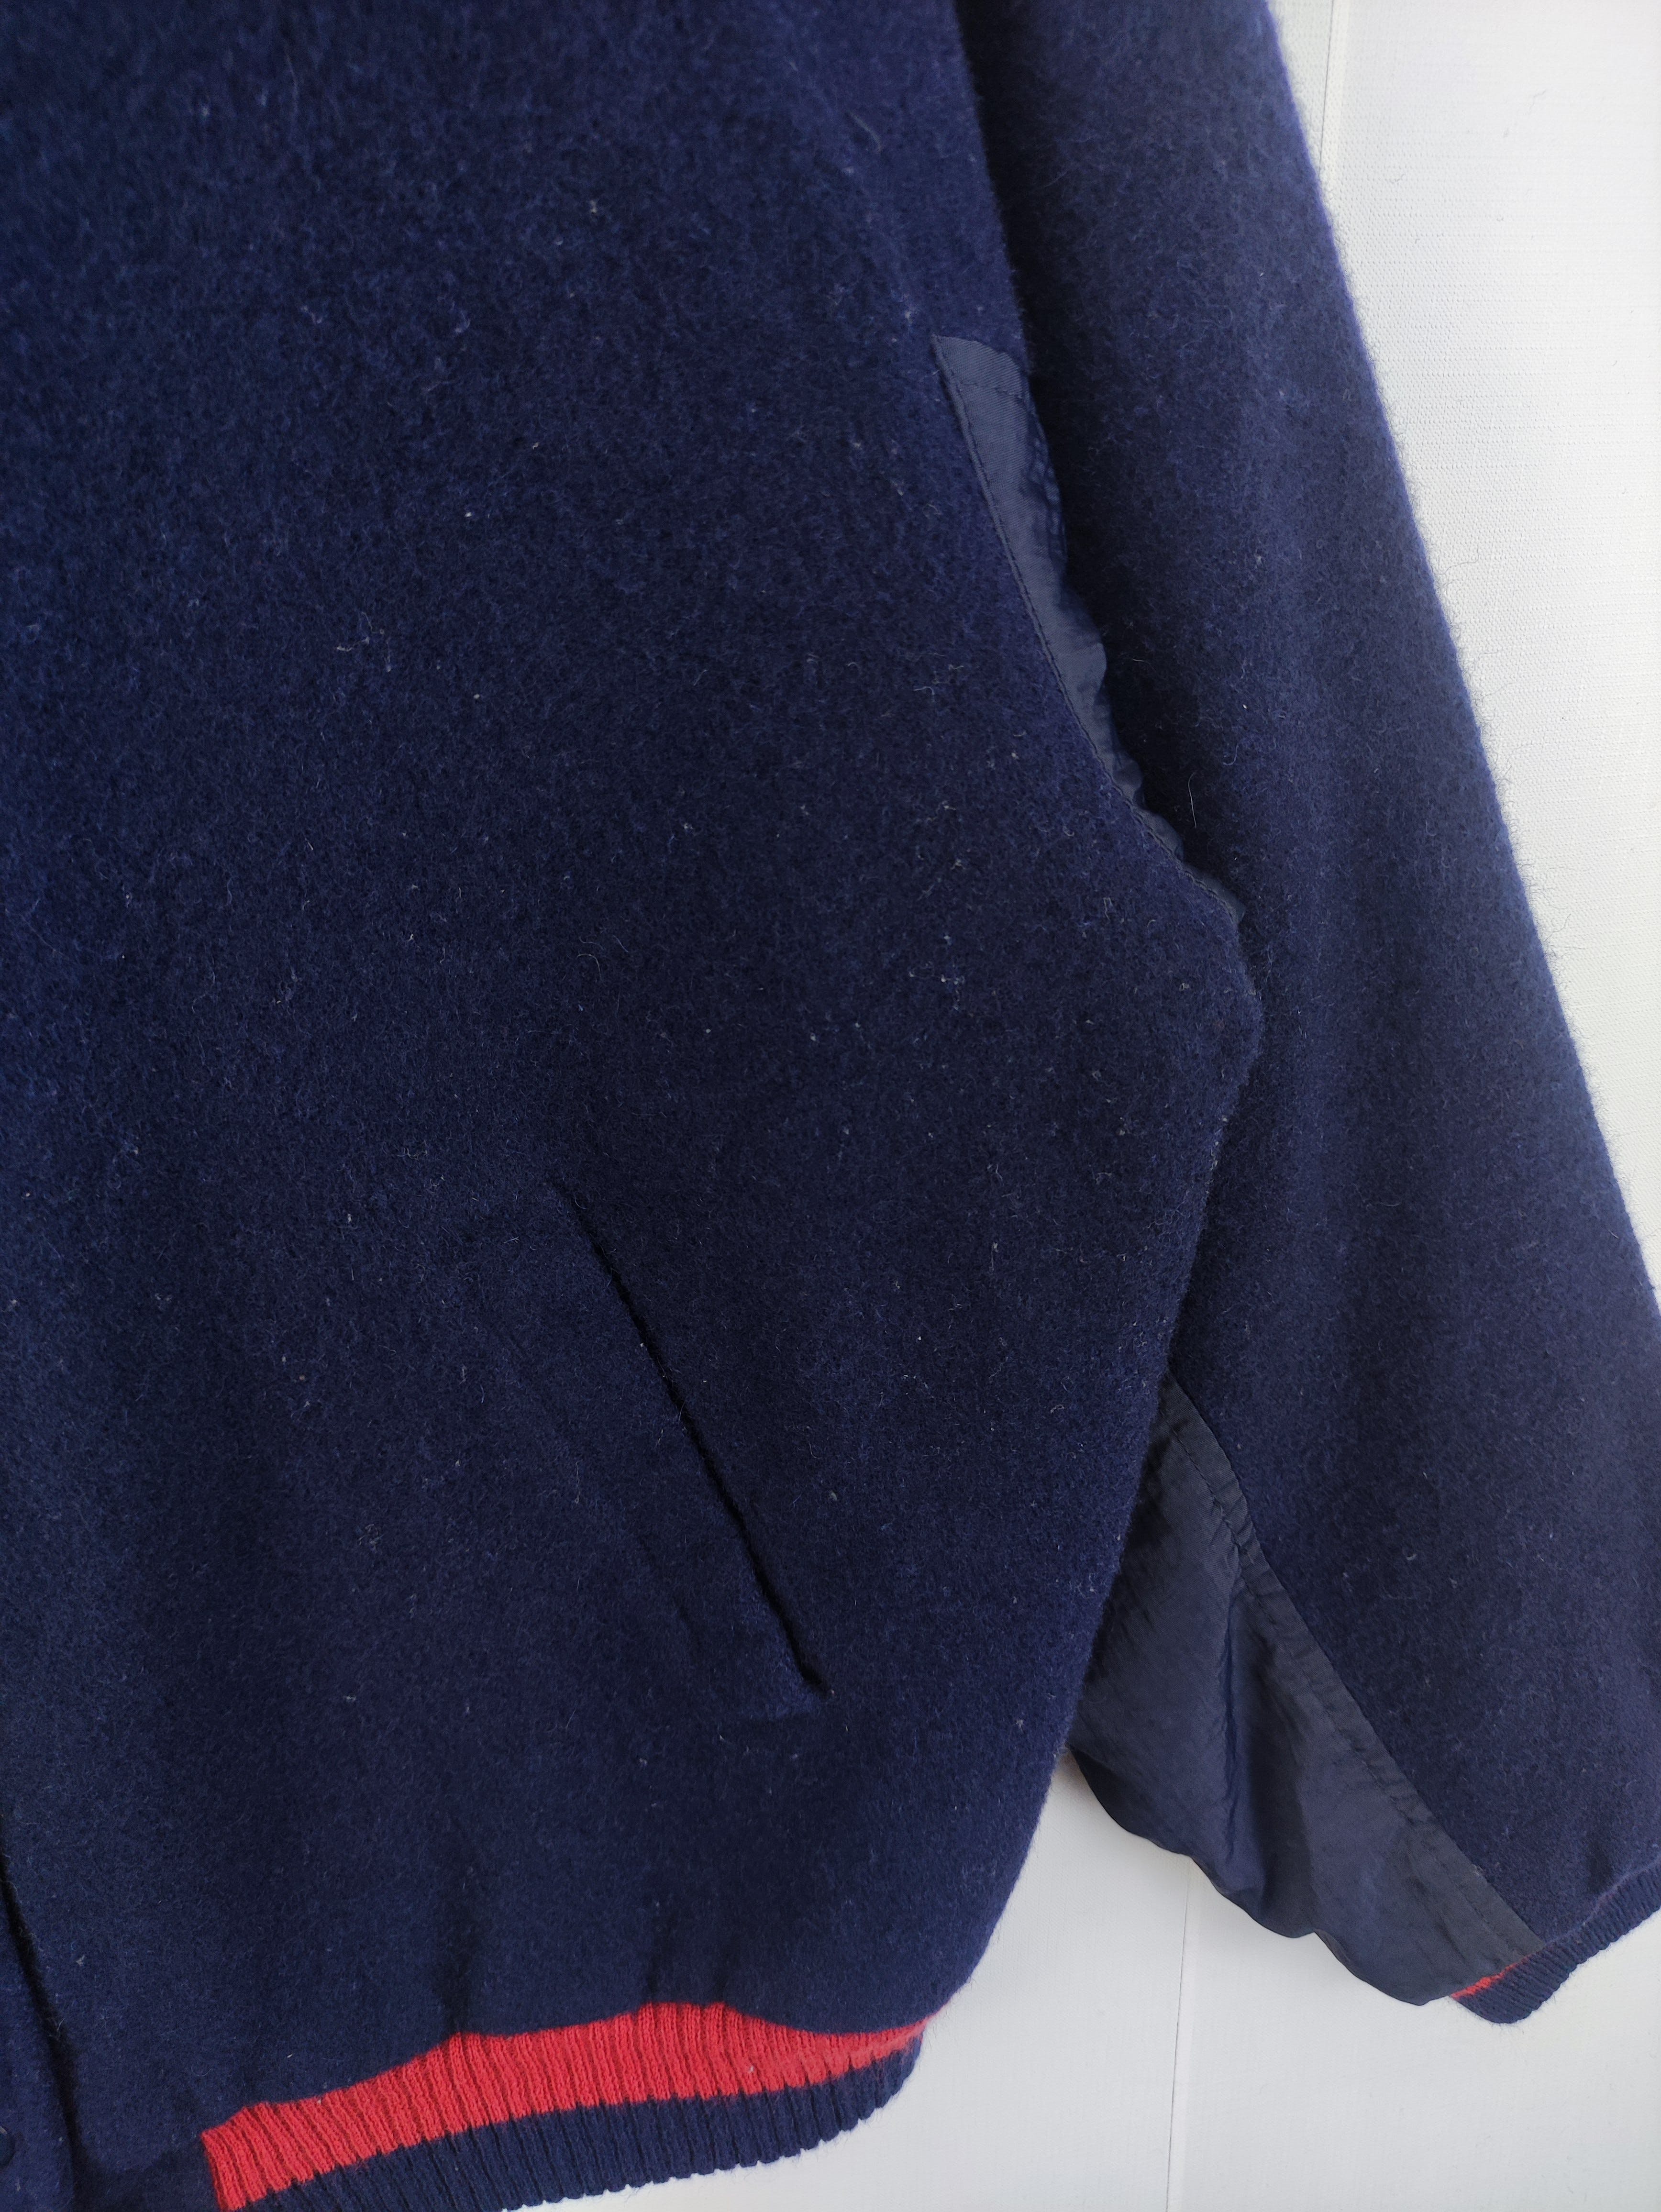 Vintage JP Club Wool Jacket Snap Button - 2